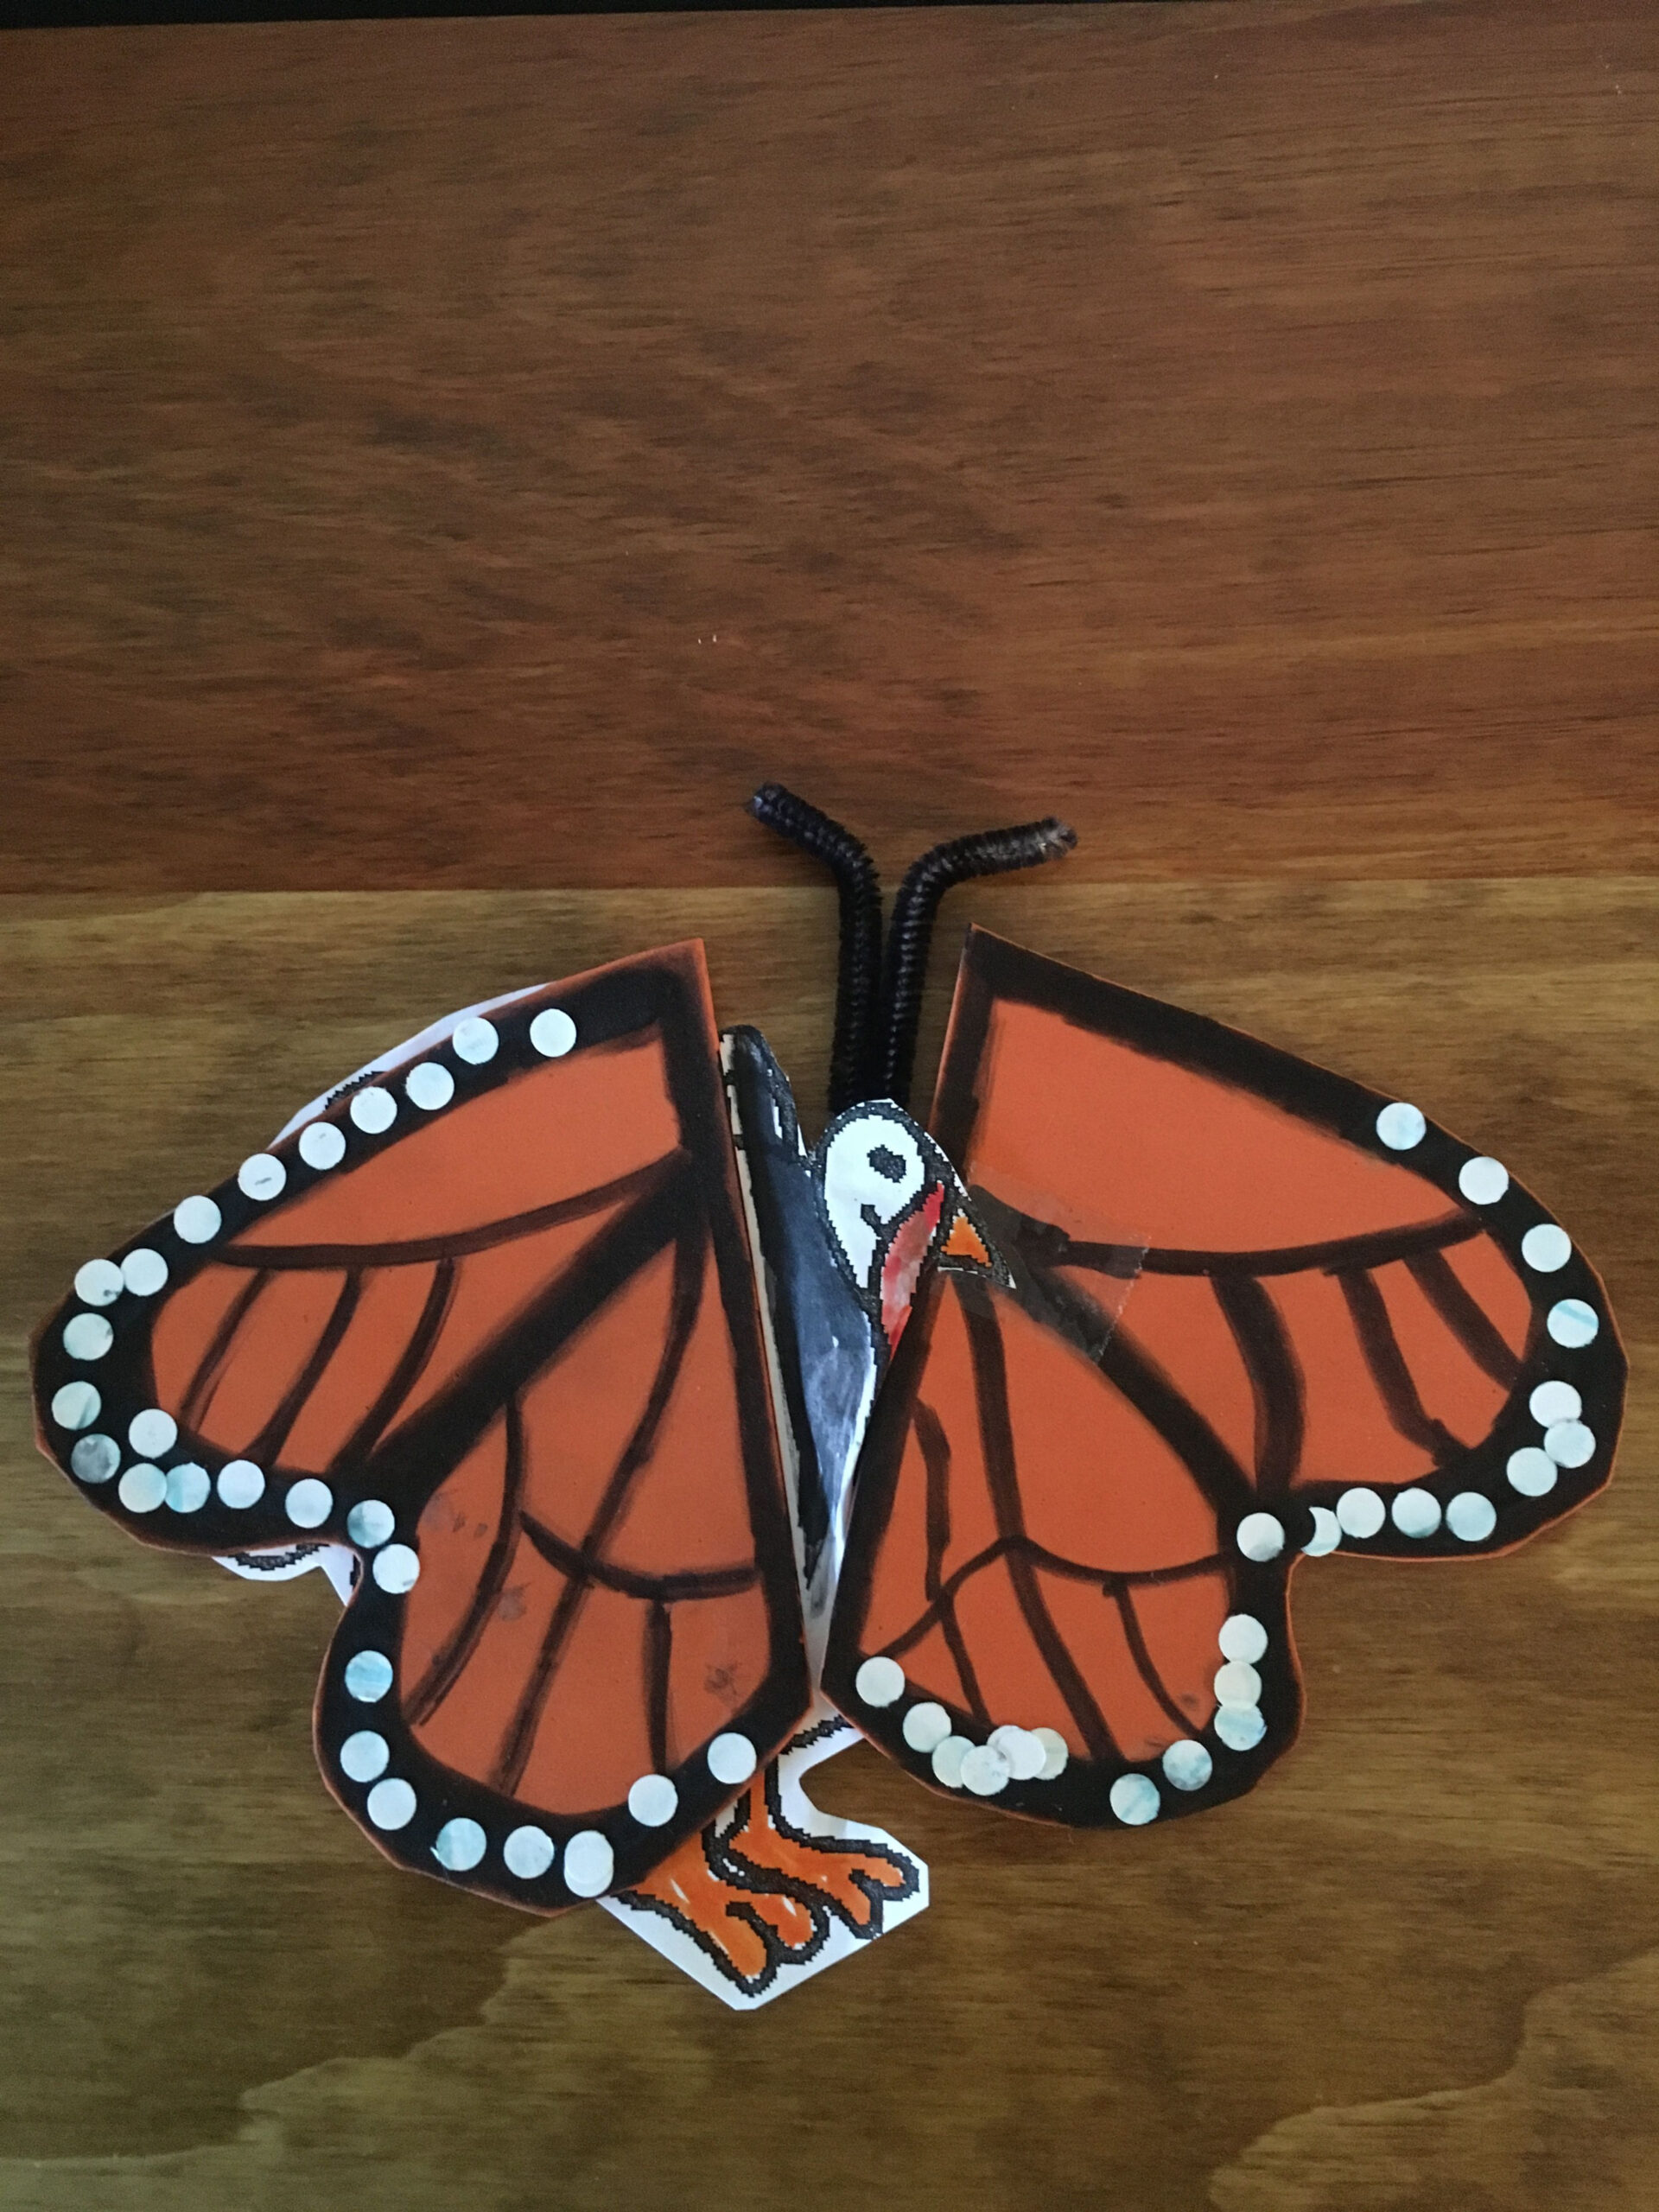 Turkey in disguise - monarch butterfly  Turkey disguise